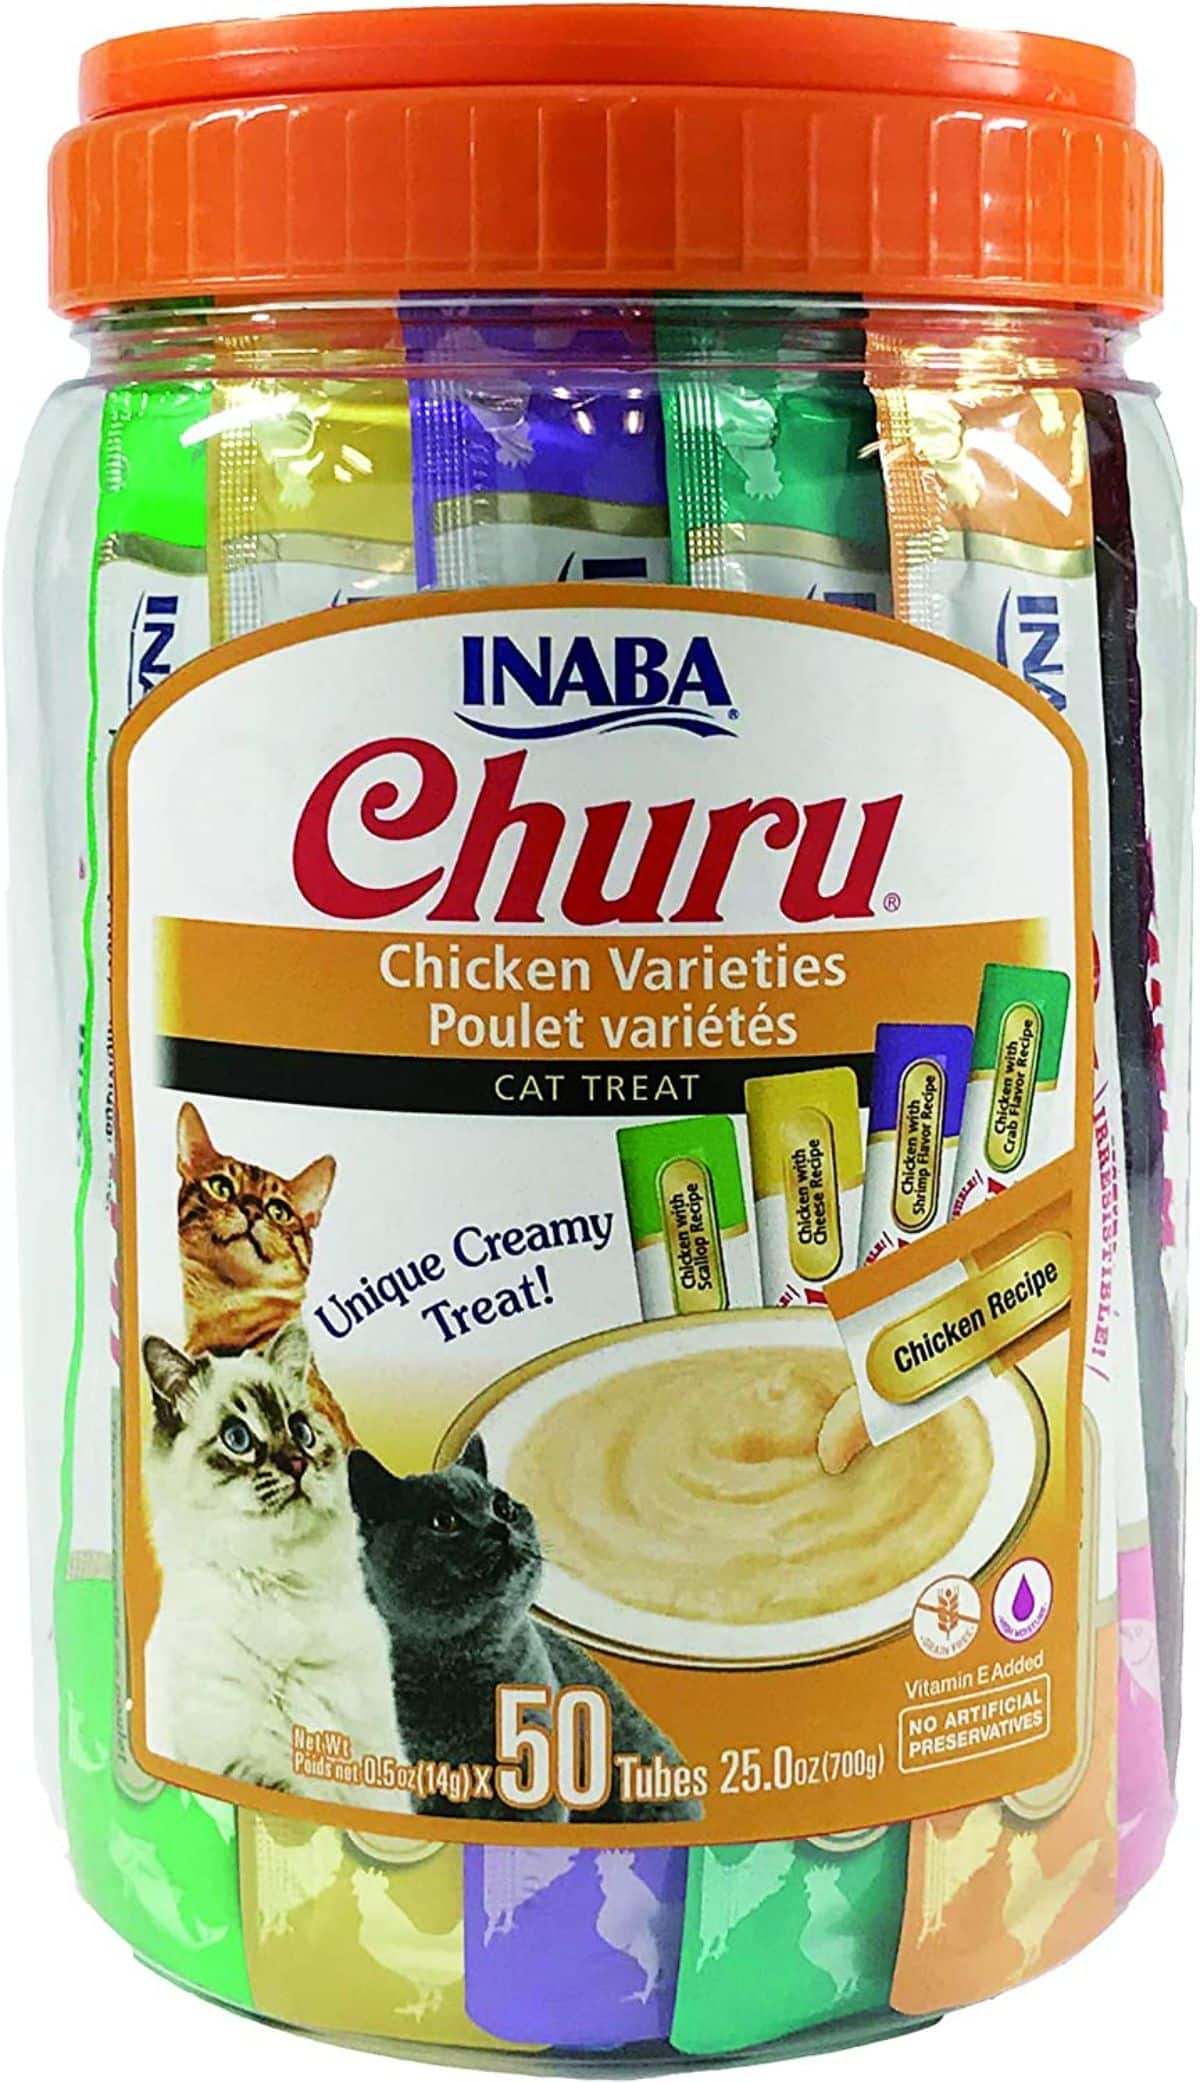 INABA Churu Cat Treats, Grain-Free, and Lickable